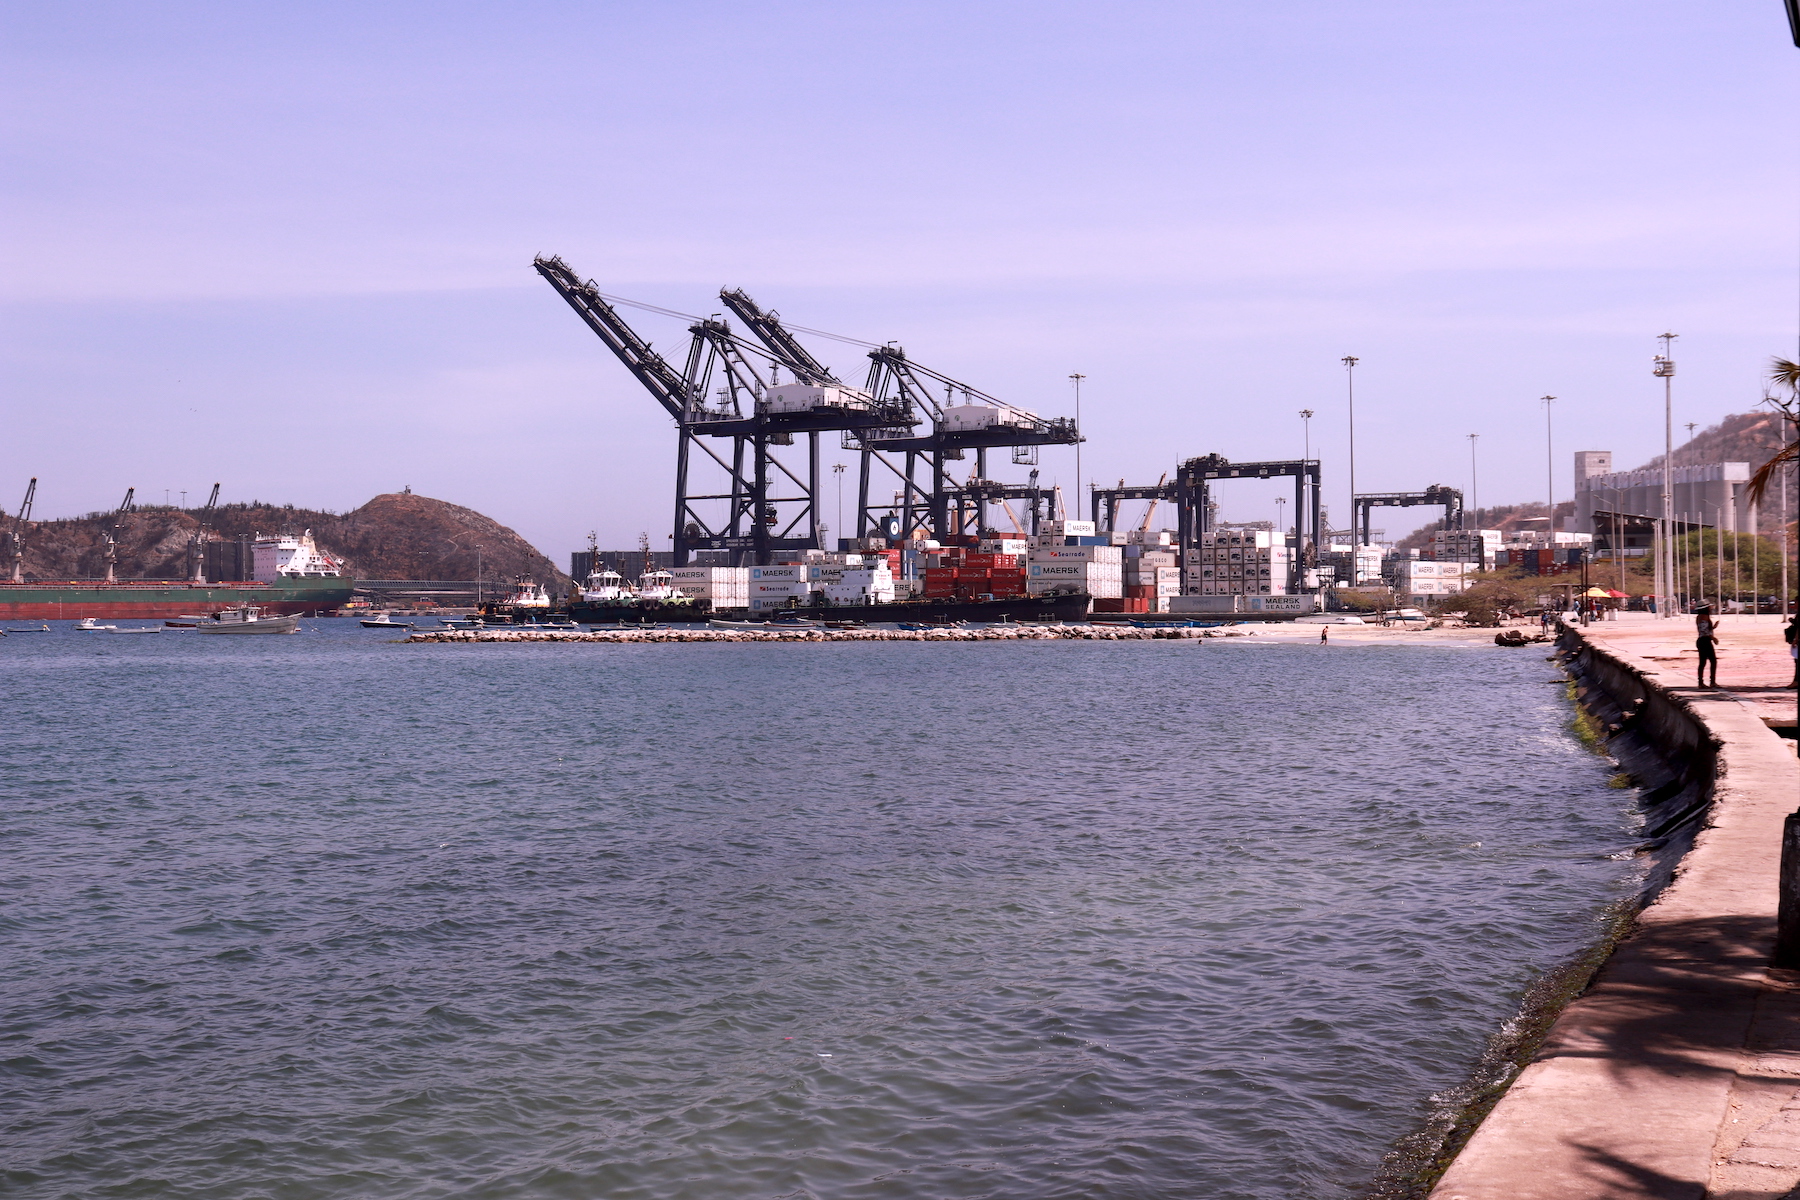 The Port of Santa Marta